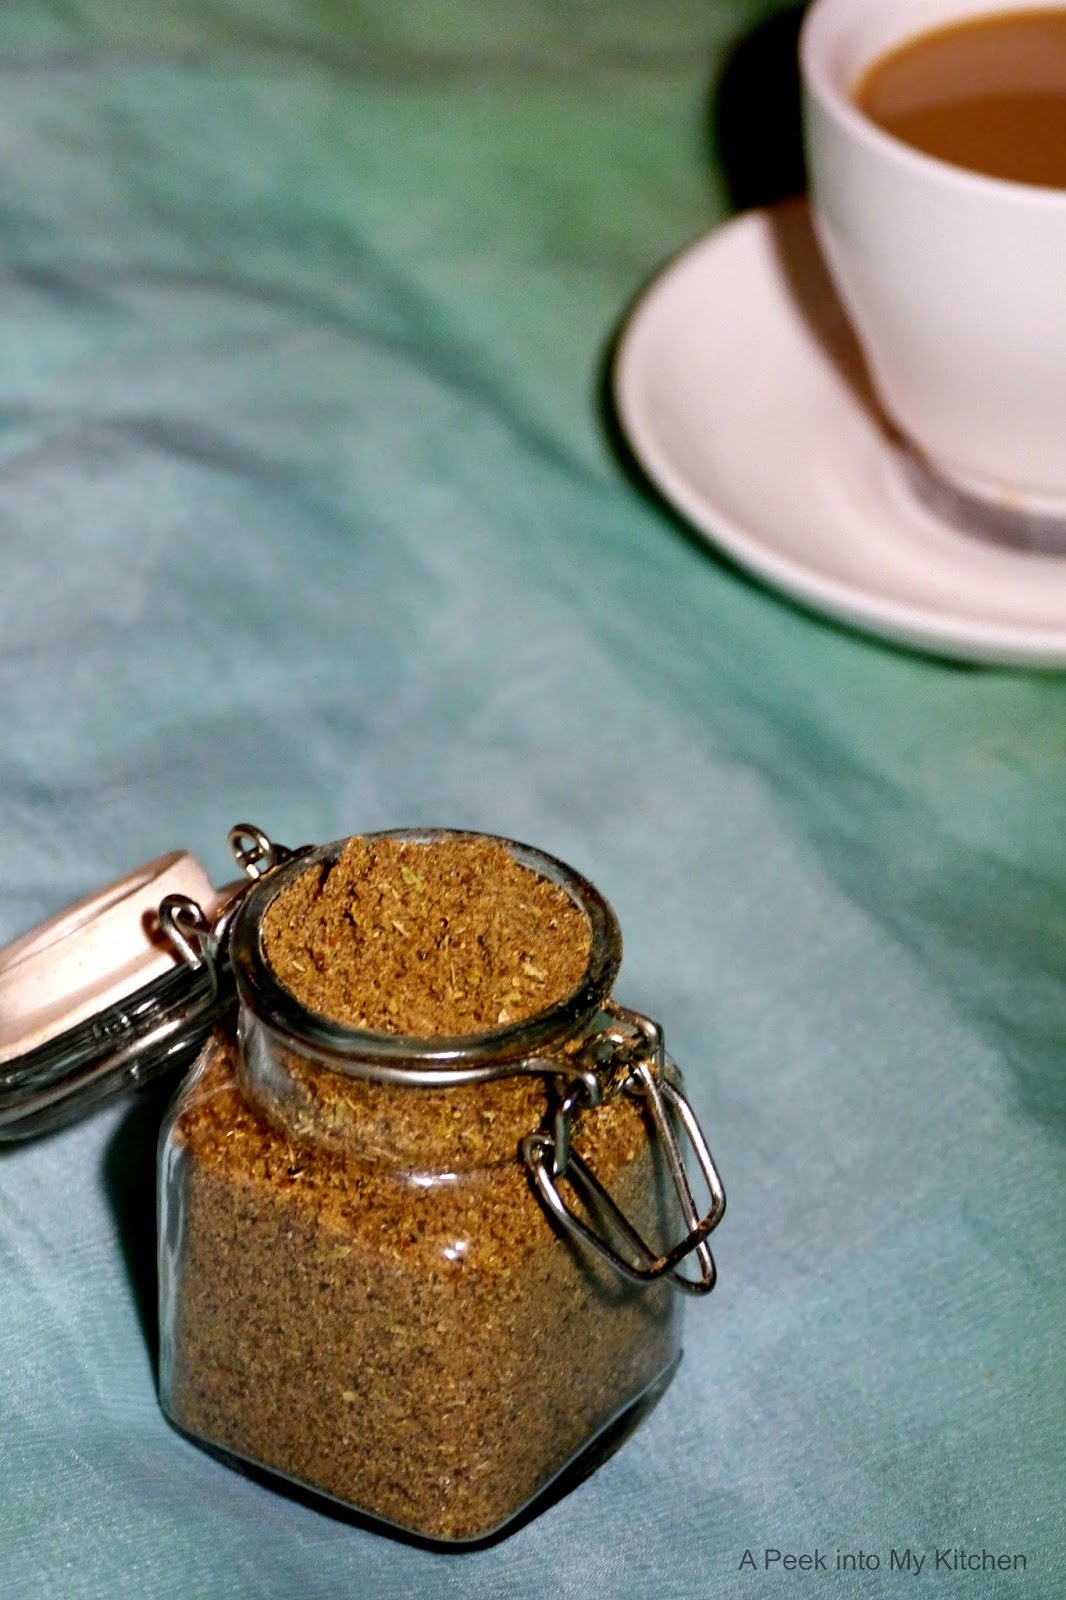 A Peek into My Kitchen: Chai (Tea) Masala Spice Mix / Blend ~ Day 31